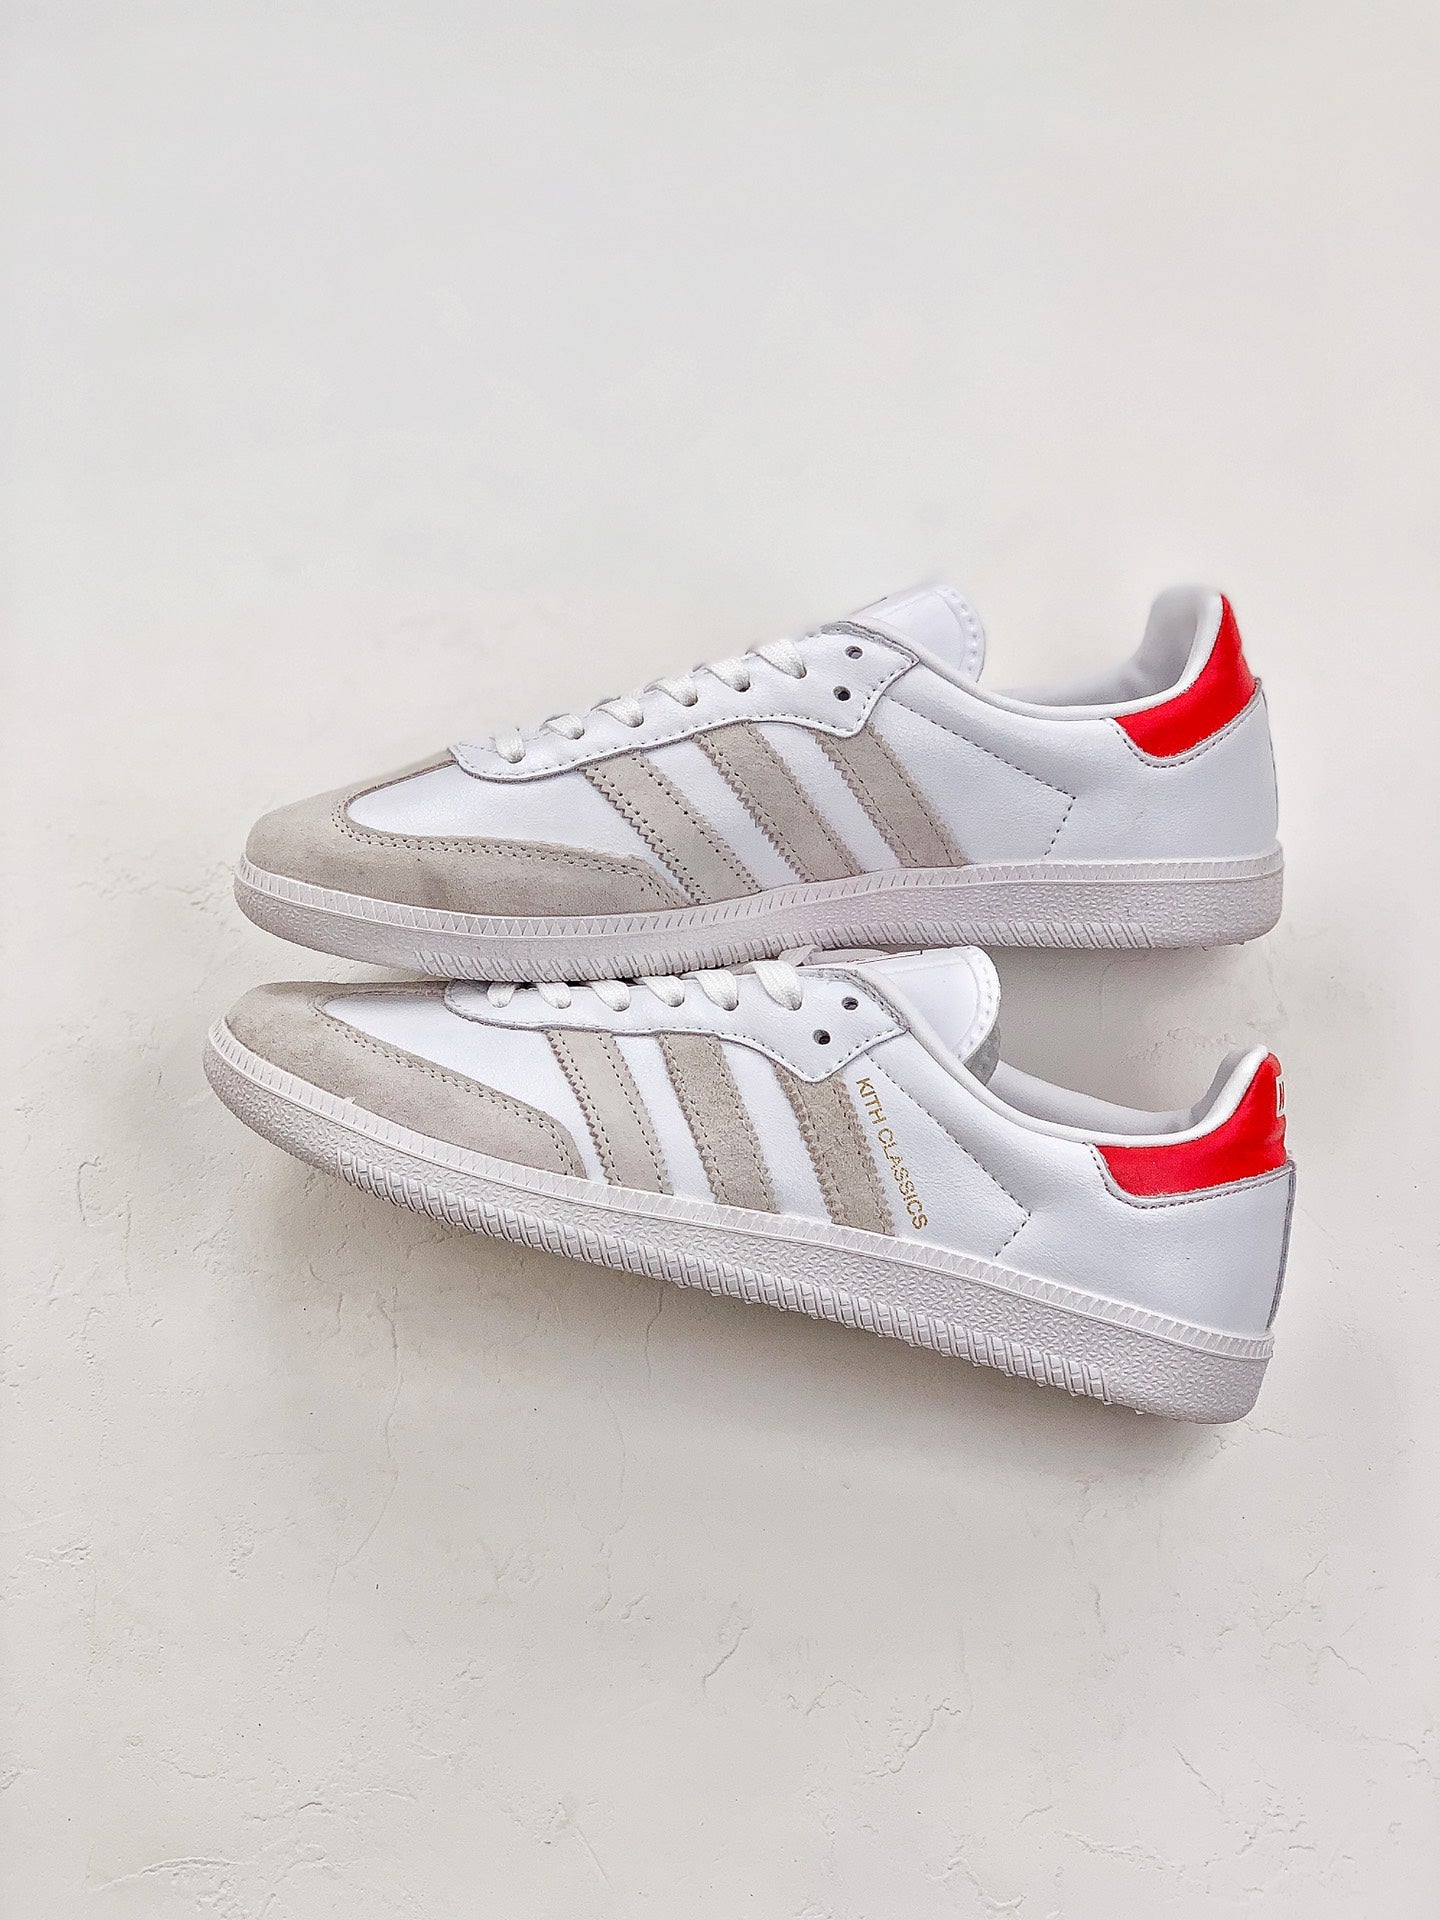 Adidas samba white red shoes